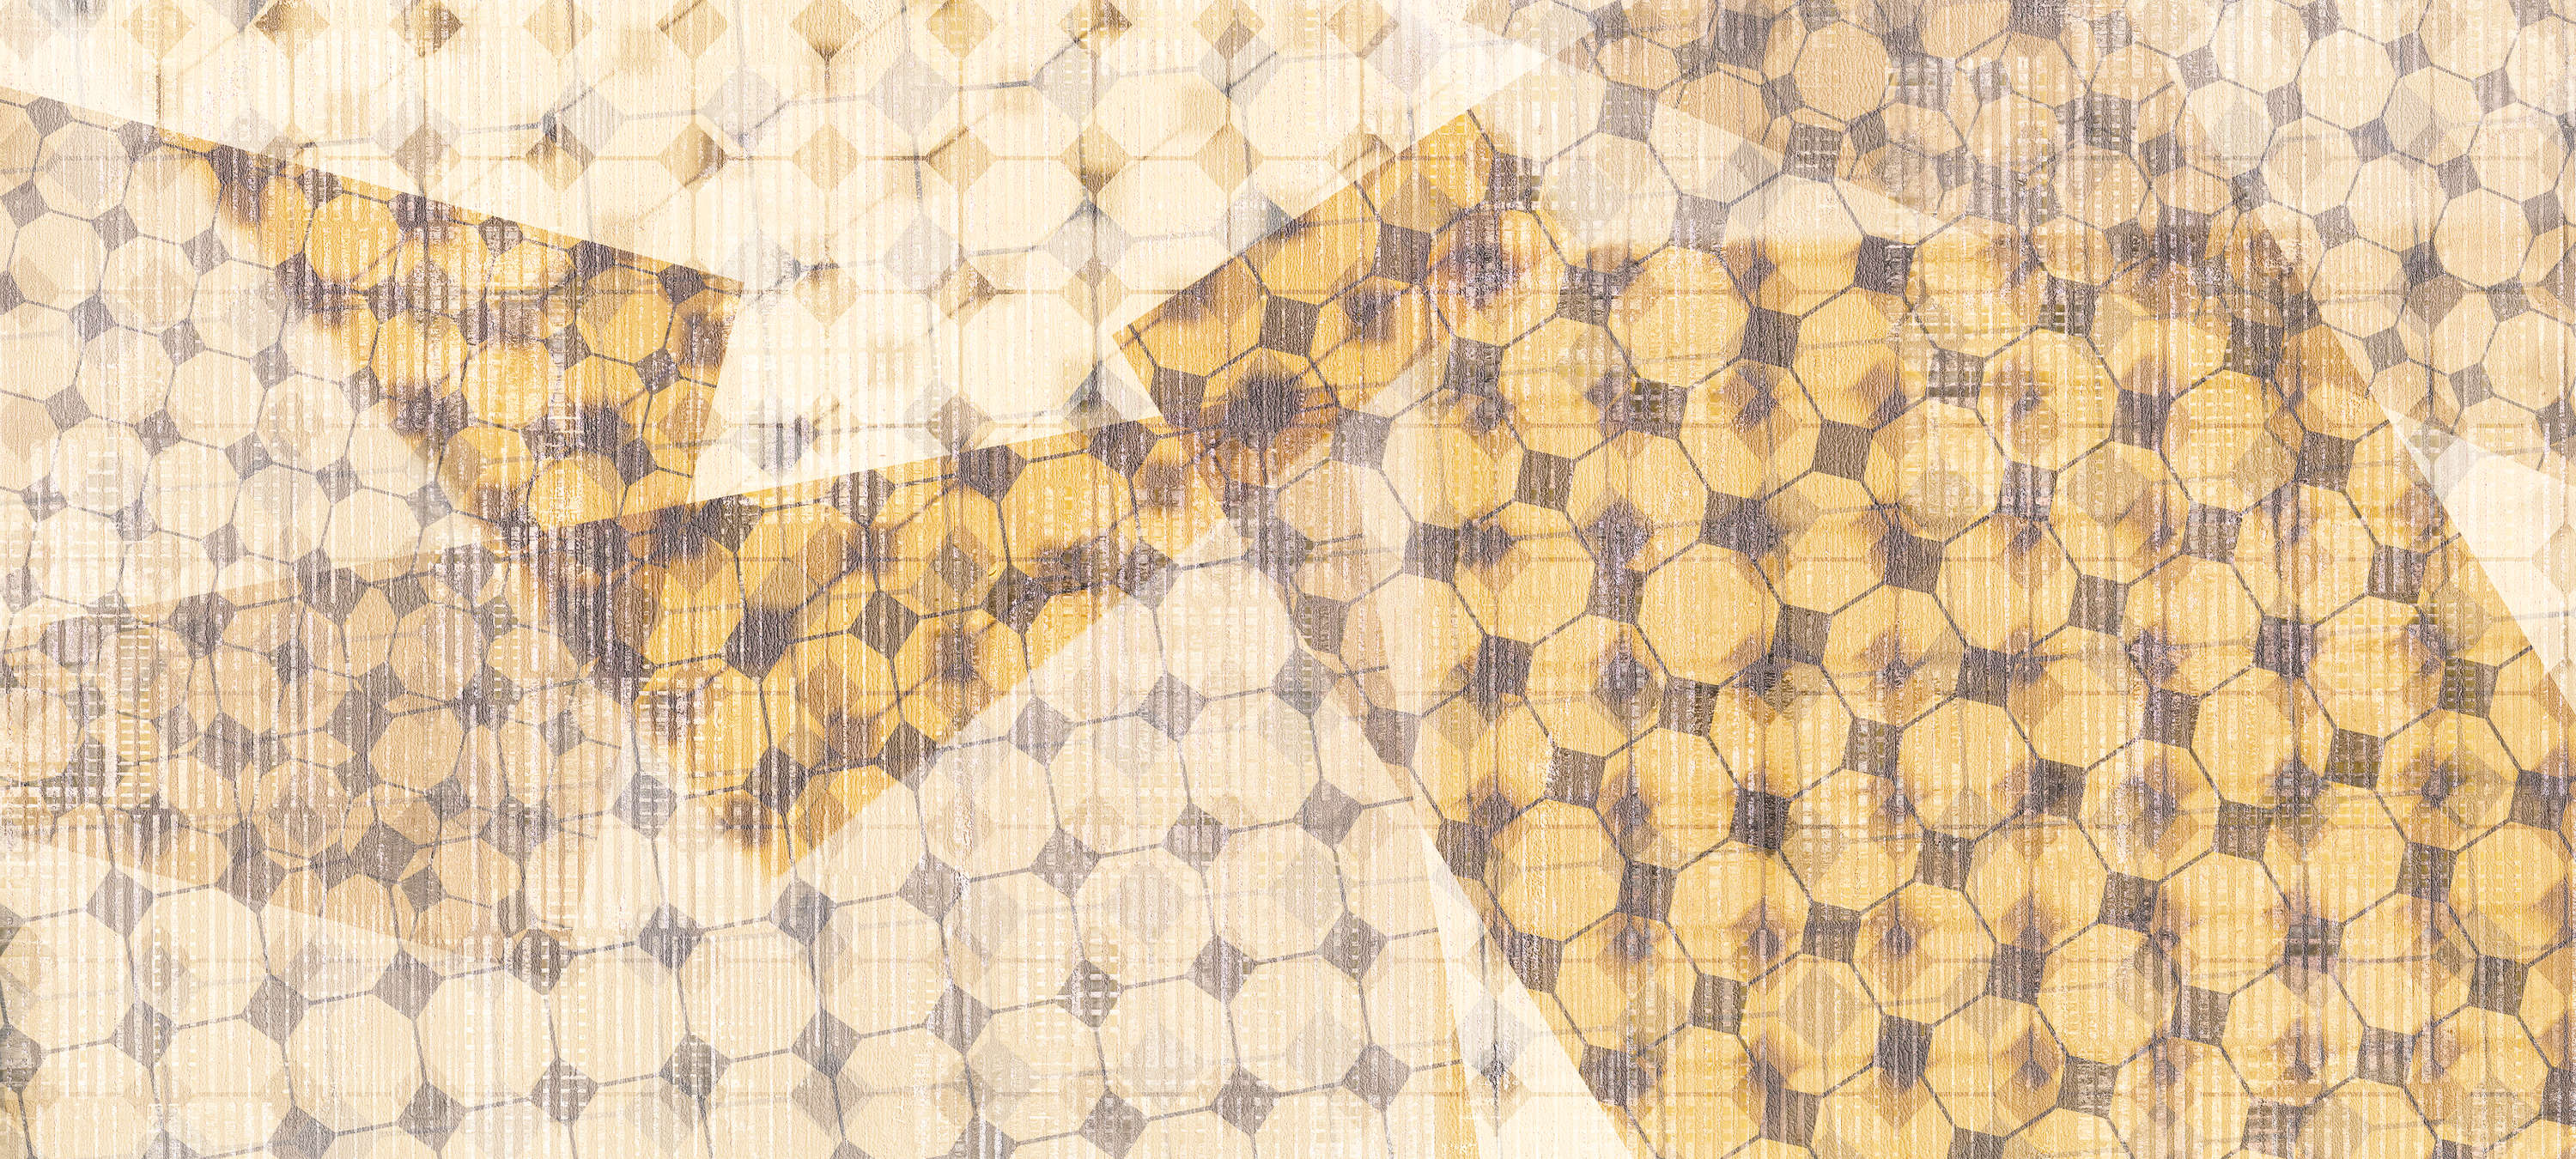             Layer effect & geometric pattern mural - yellow, orange, white
        